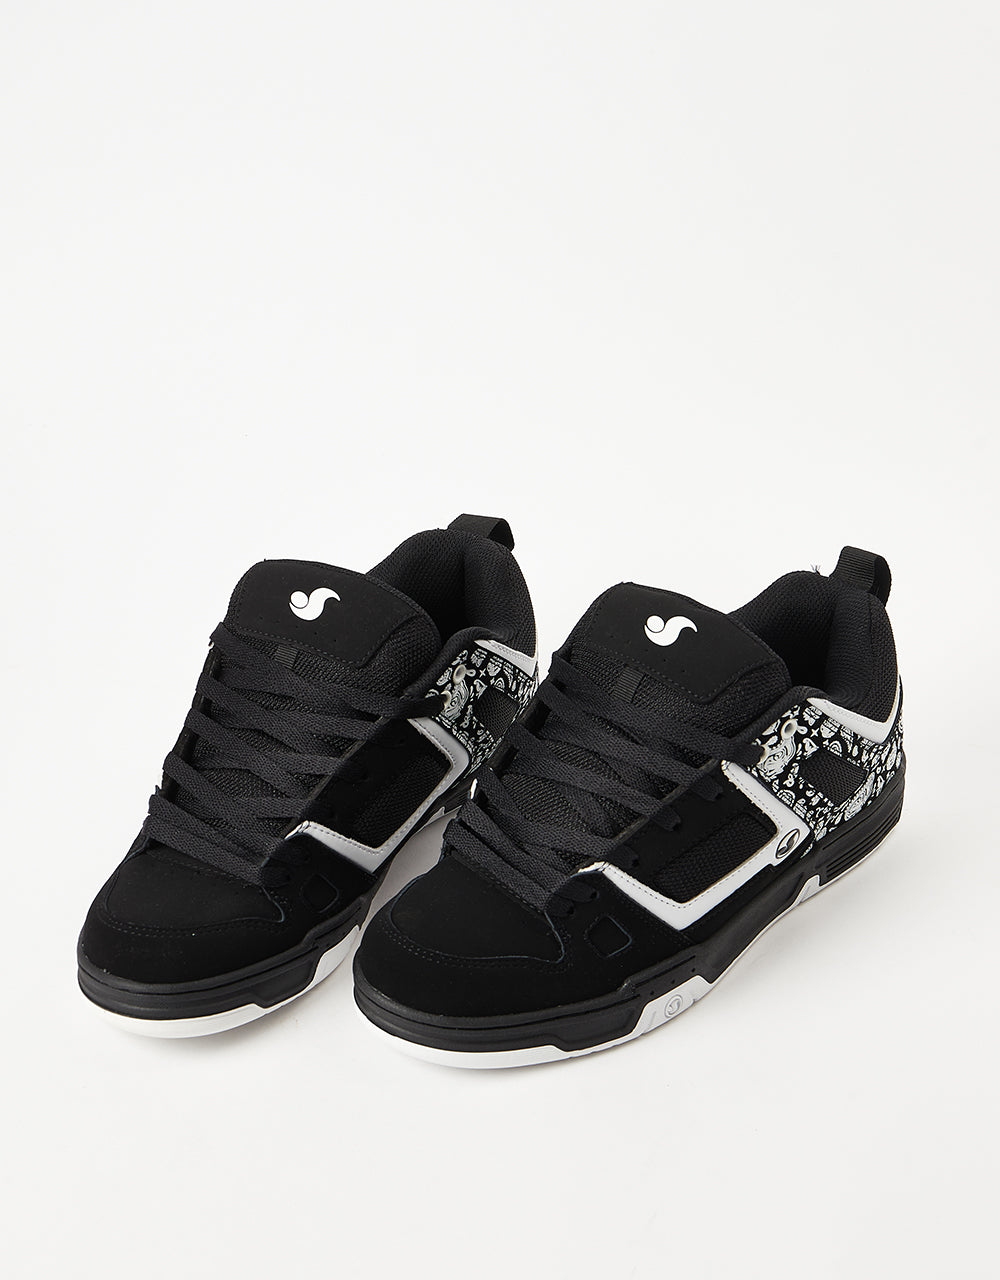 DVS Gambol Skate Shoes - Black/White/PU Nubuck